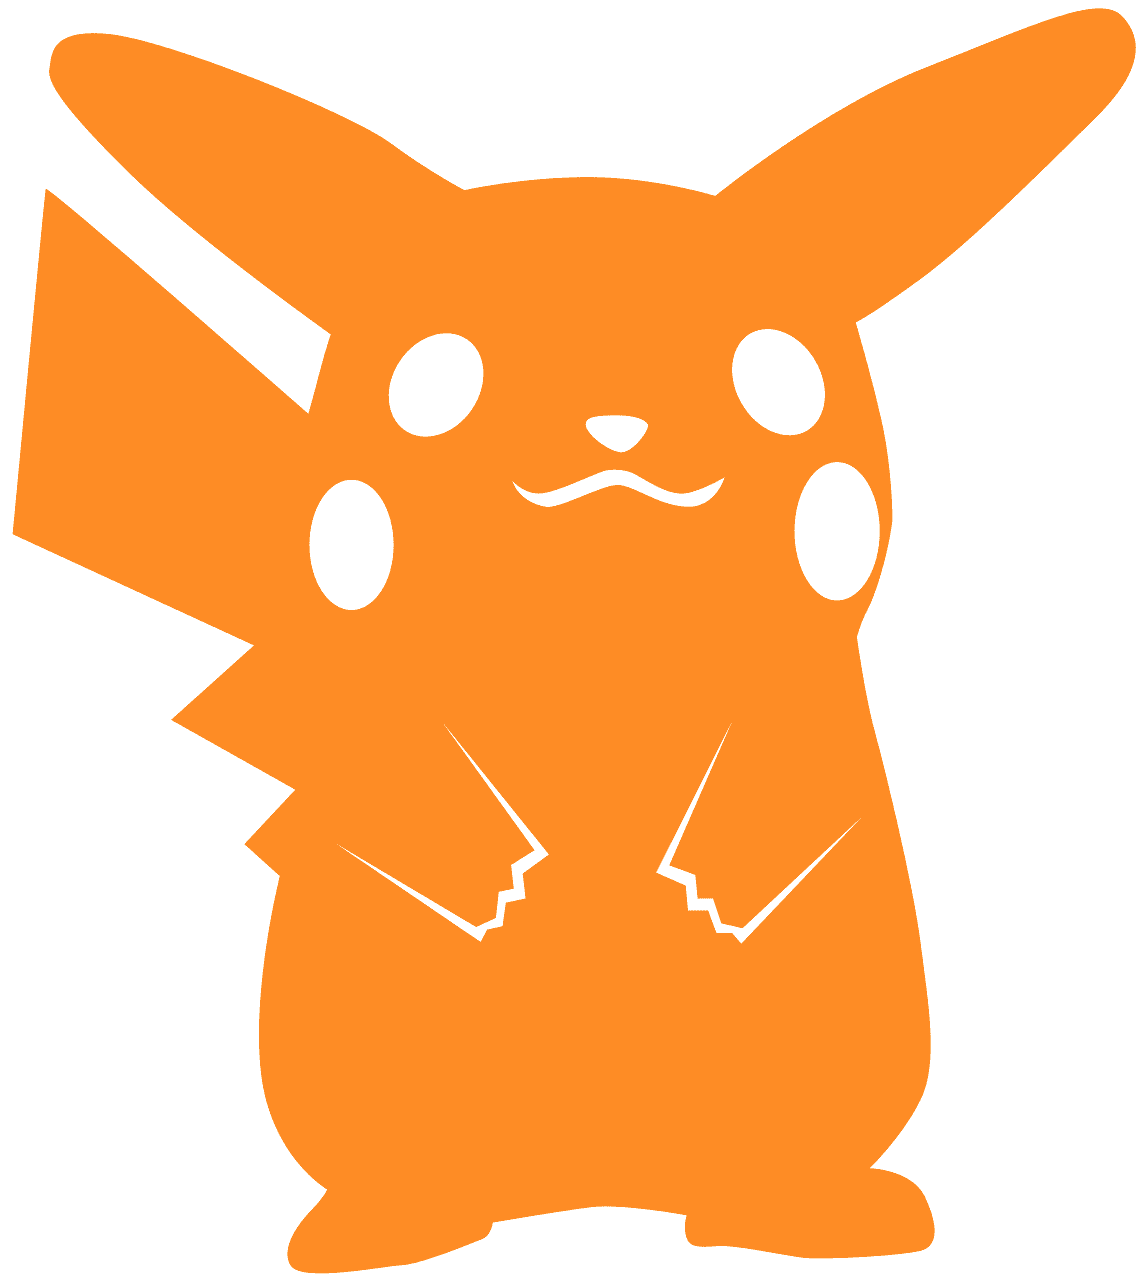 Pikachu silhouette